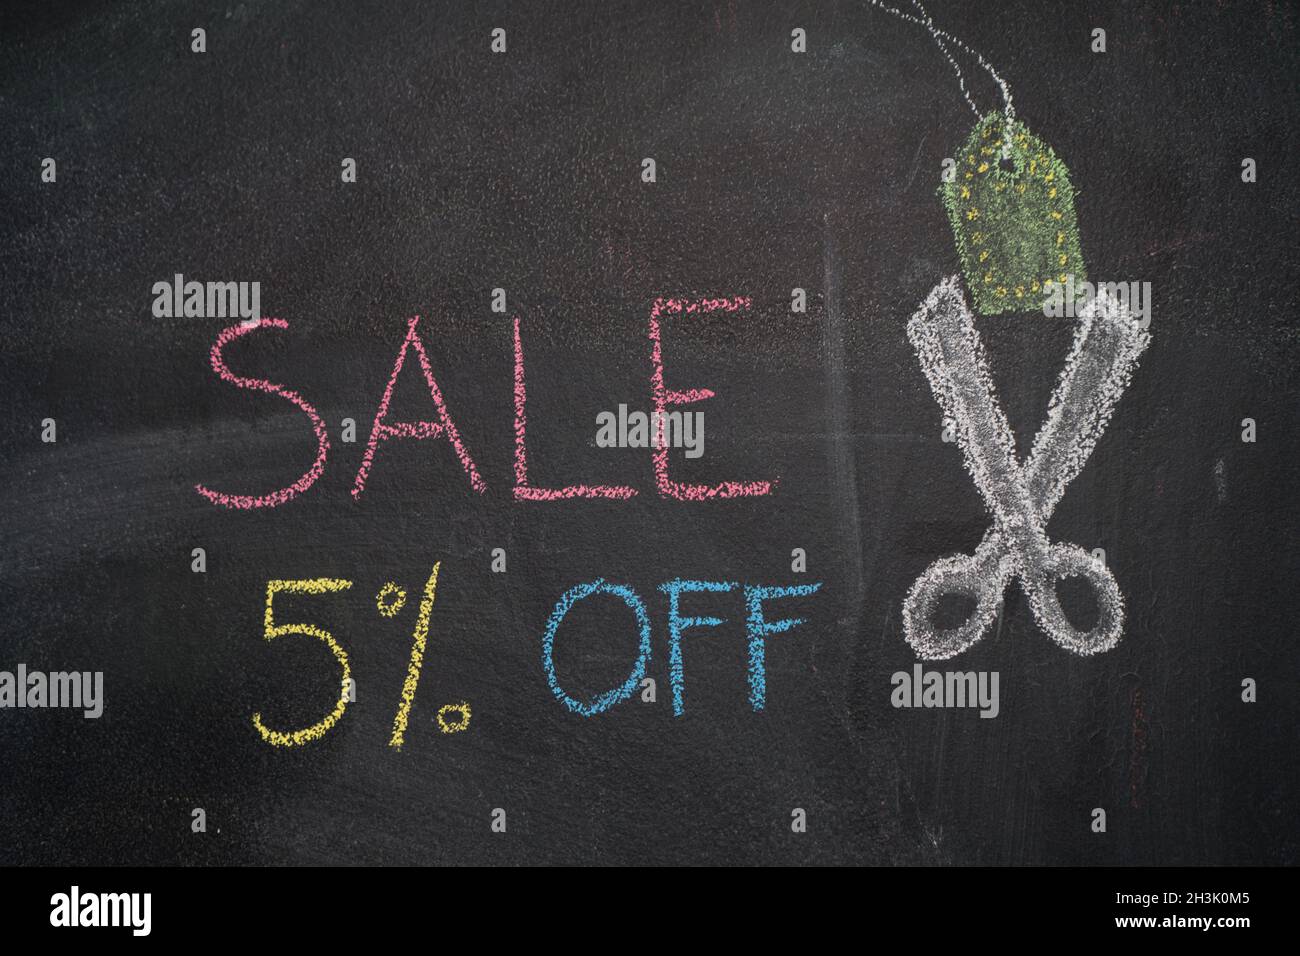 Sale 5% off on chalkboard Stock Photo